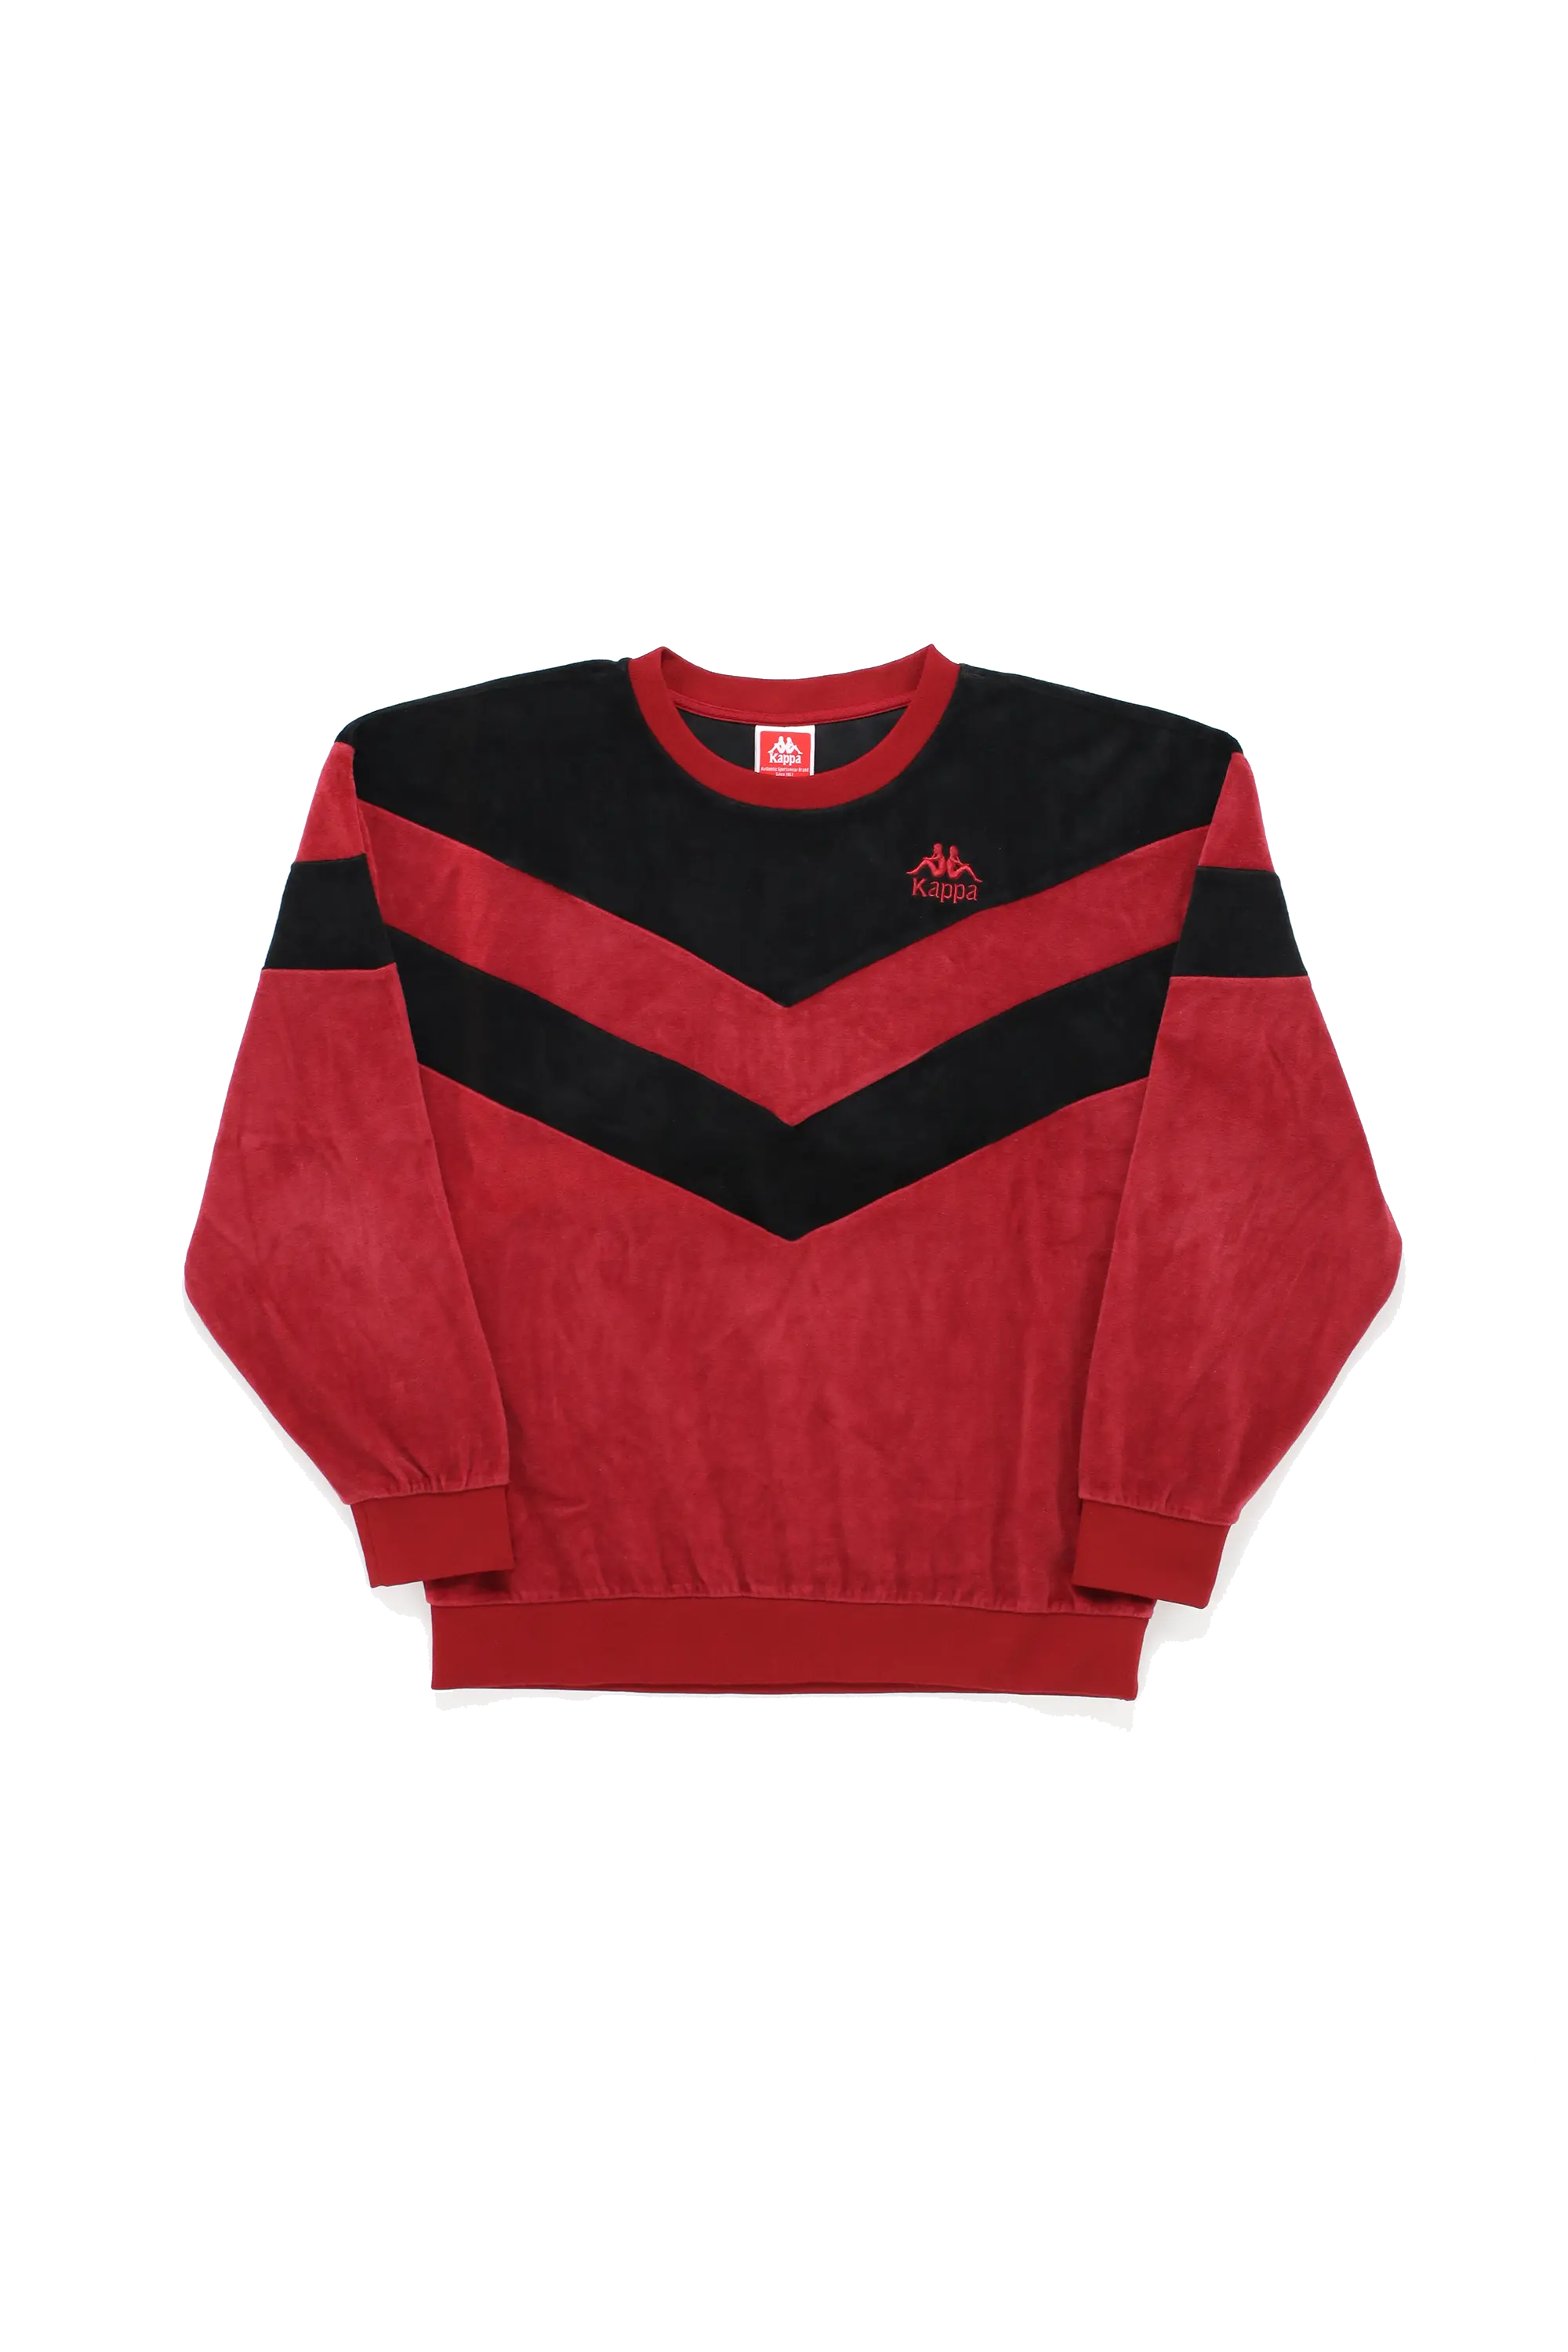 Kappa Velour Sweater